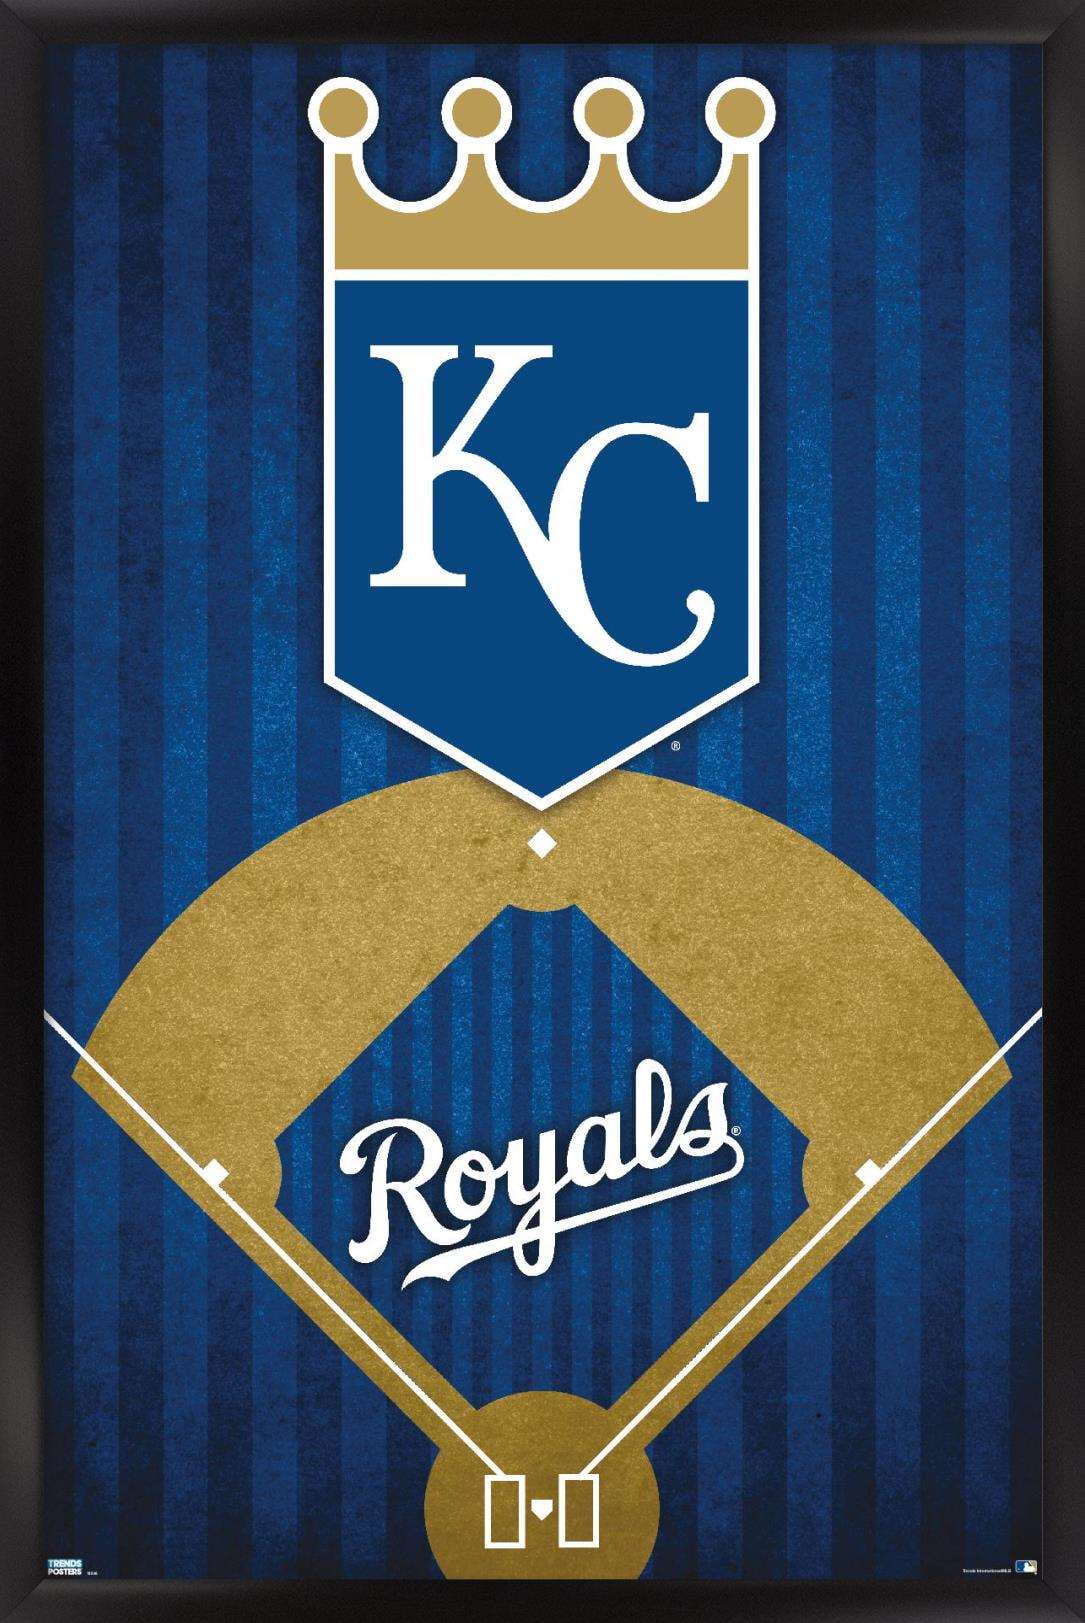 MLB Kansas City Royals - Logo 20 Wall Poster, 14.725 x 22.375, Framed